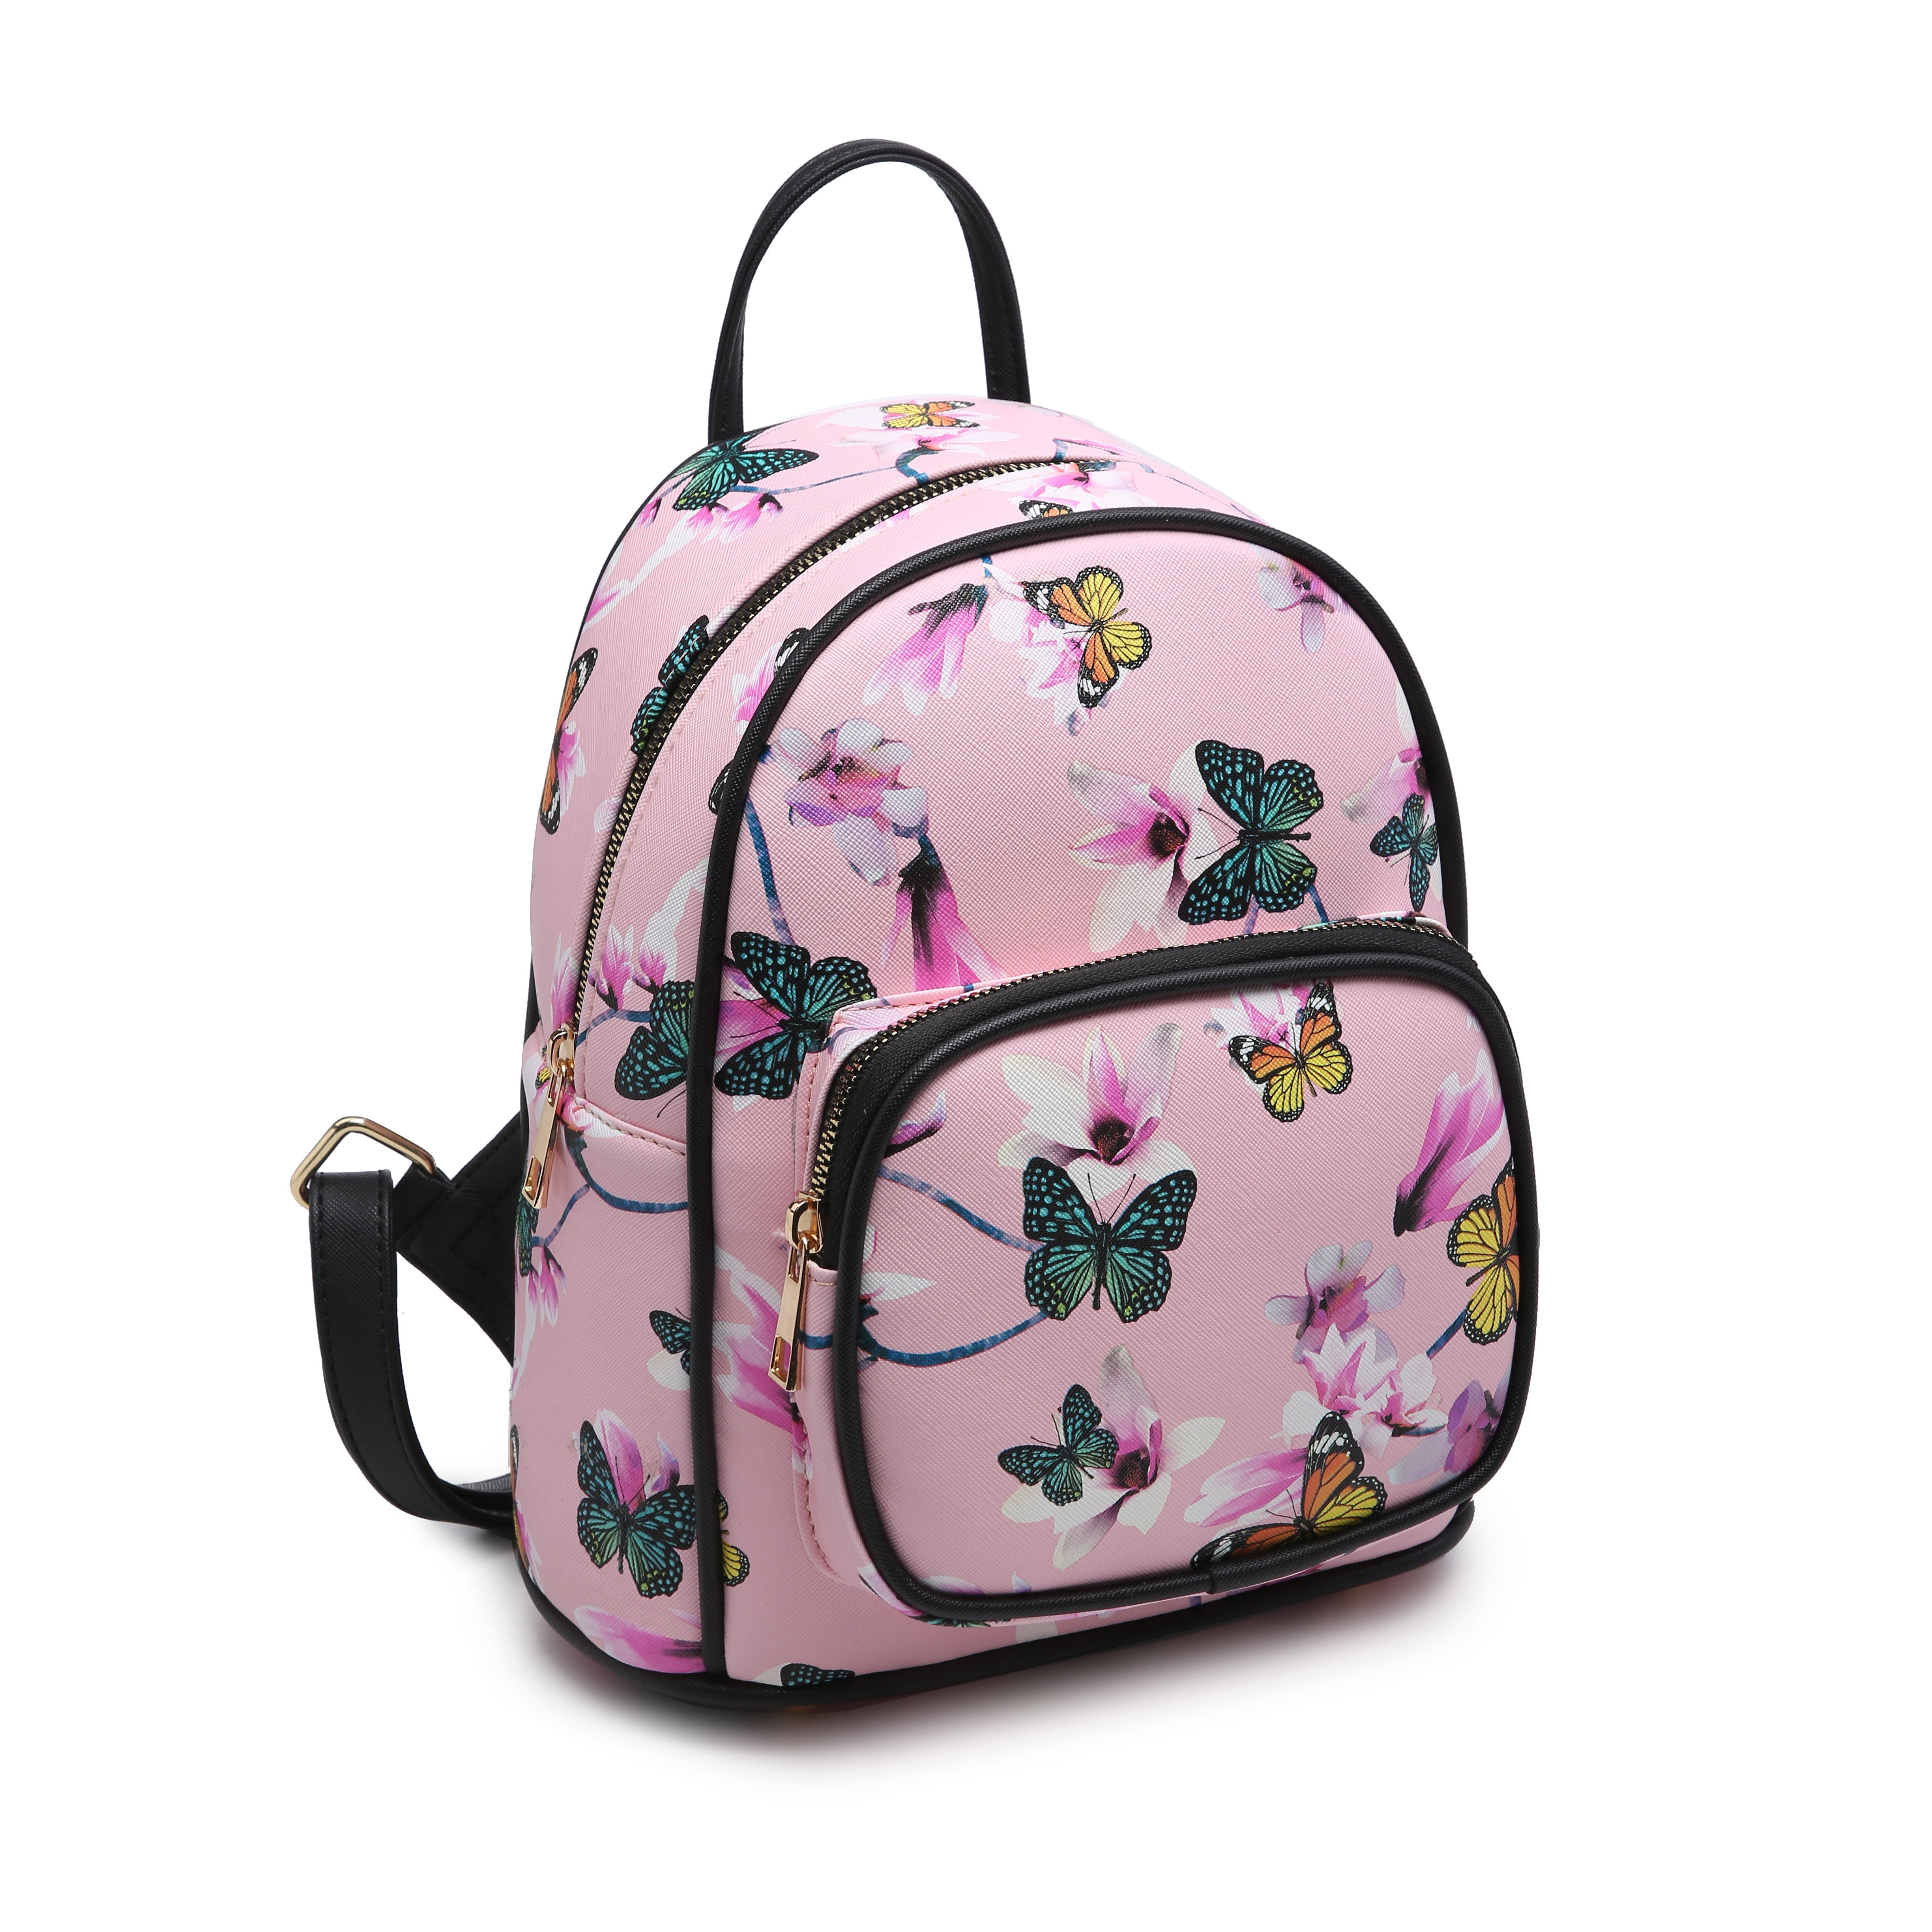 POPPY - POPPY Fashion Floral Backpack Purse for Women Girls School Shoulder Bag Travel Daypack ...